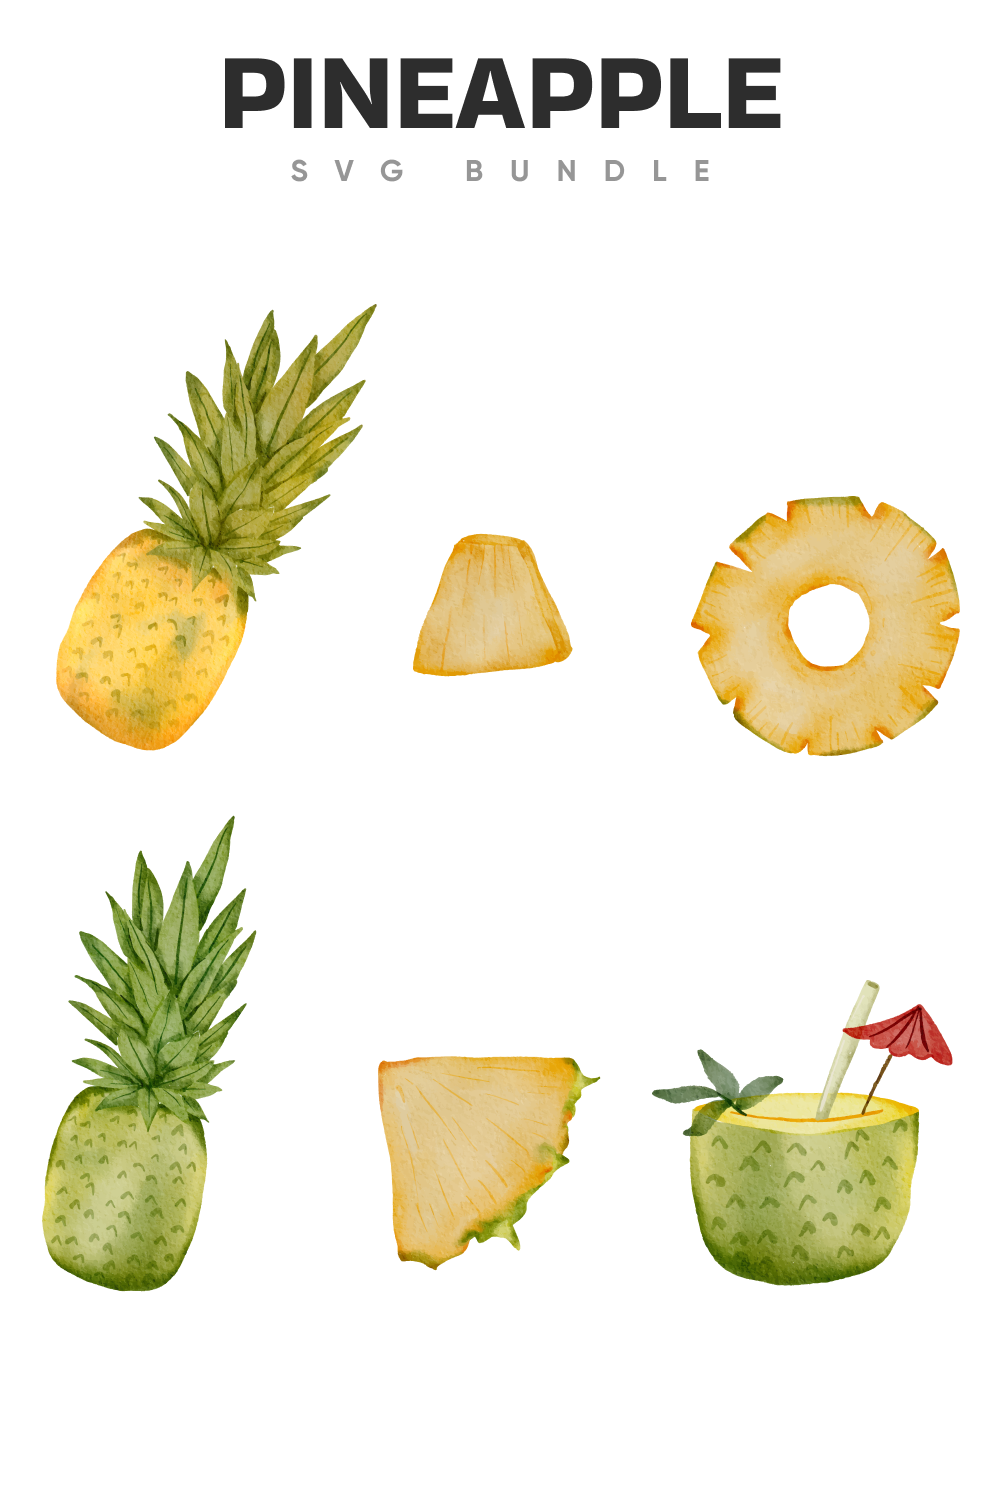 So realistic pineapple.